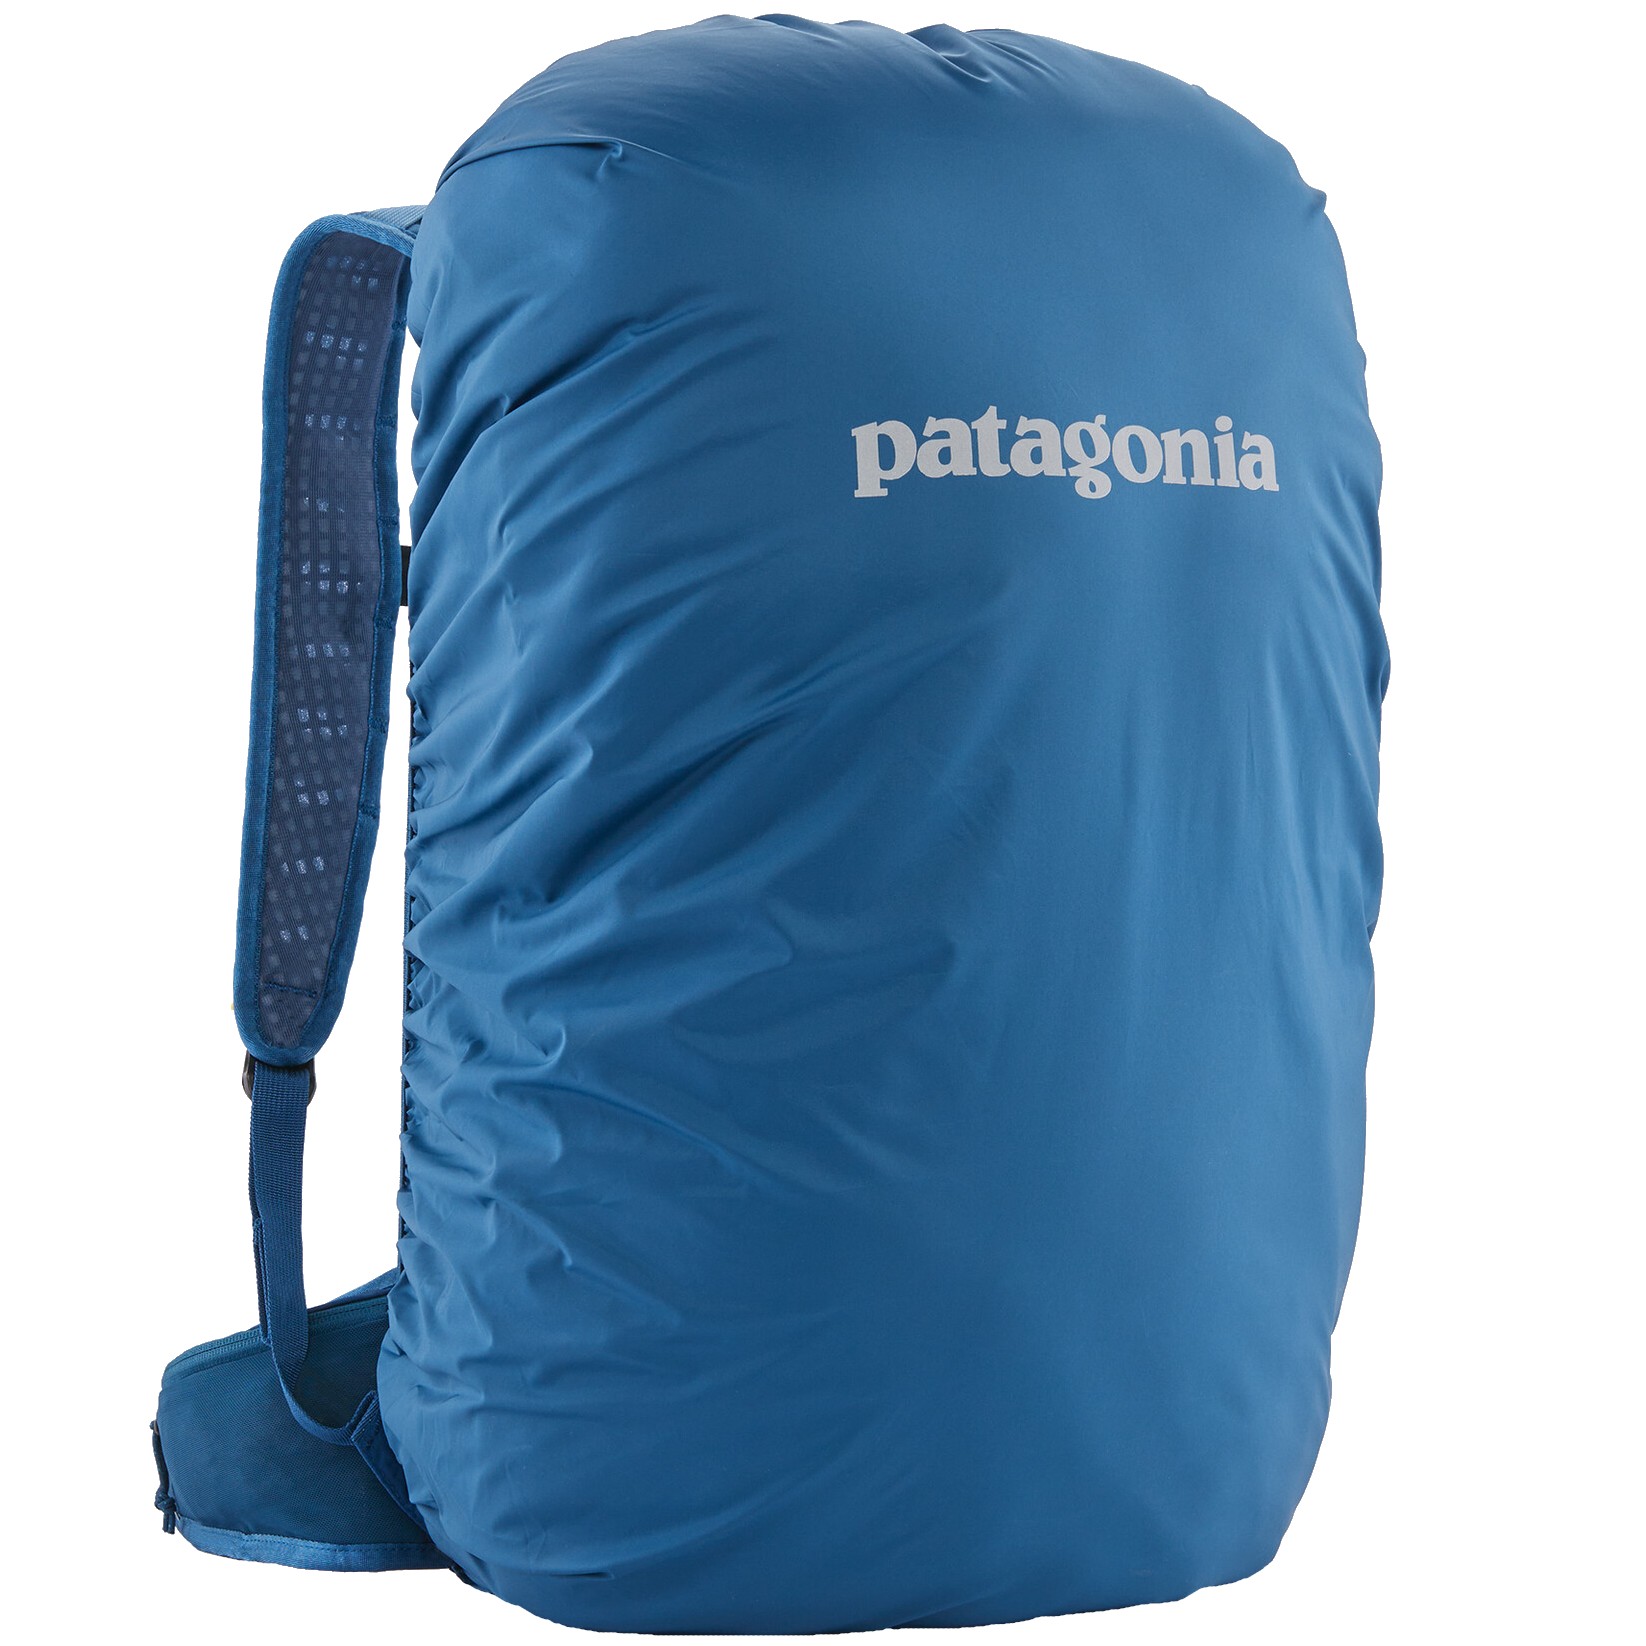 Patagonia Altvia 28 Day Pack/Hiking Backpack